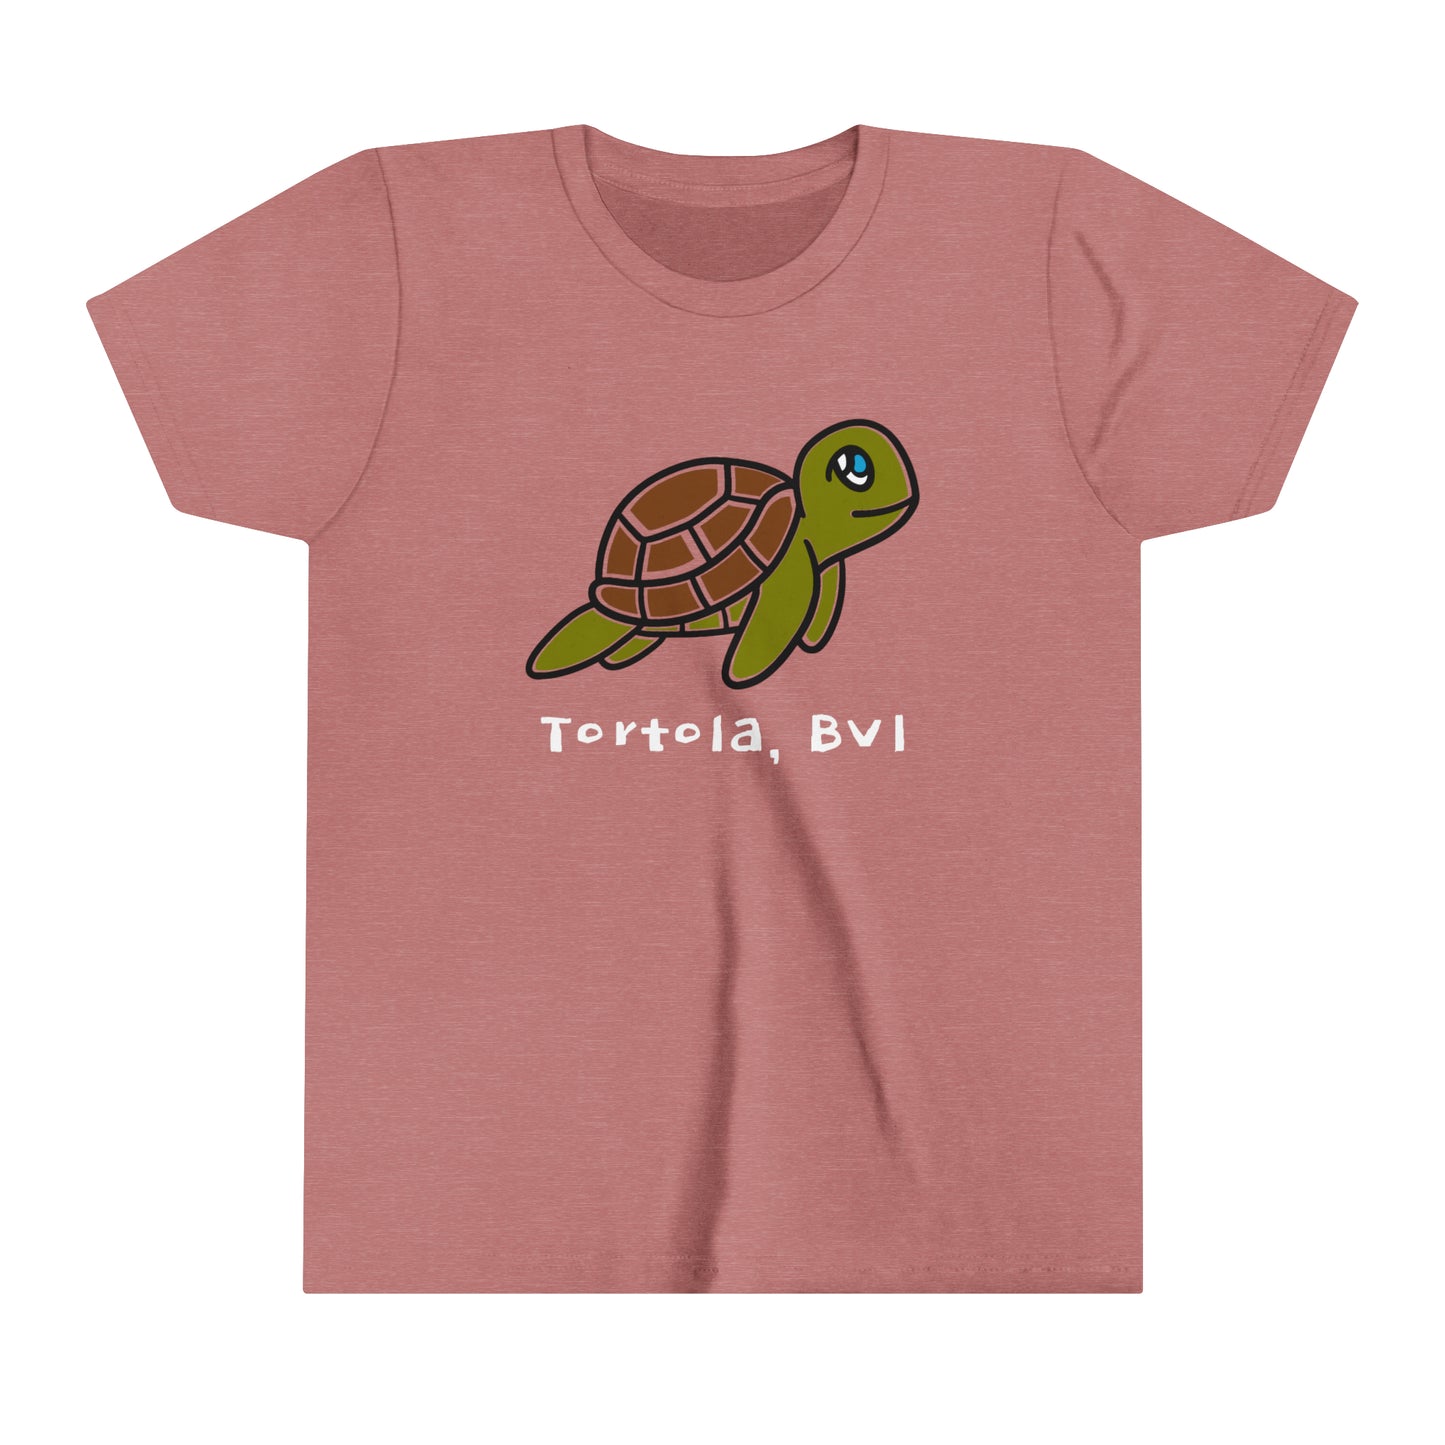 "Turtle | Tortola" Youth S/S Tee